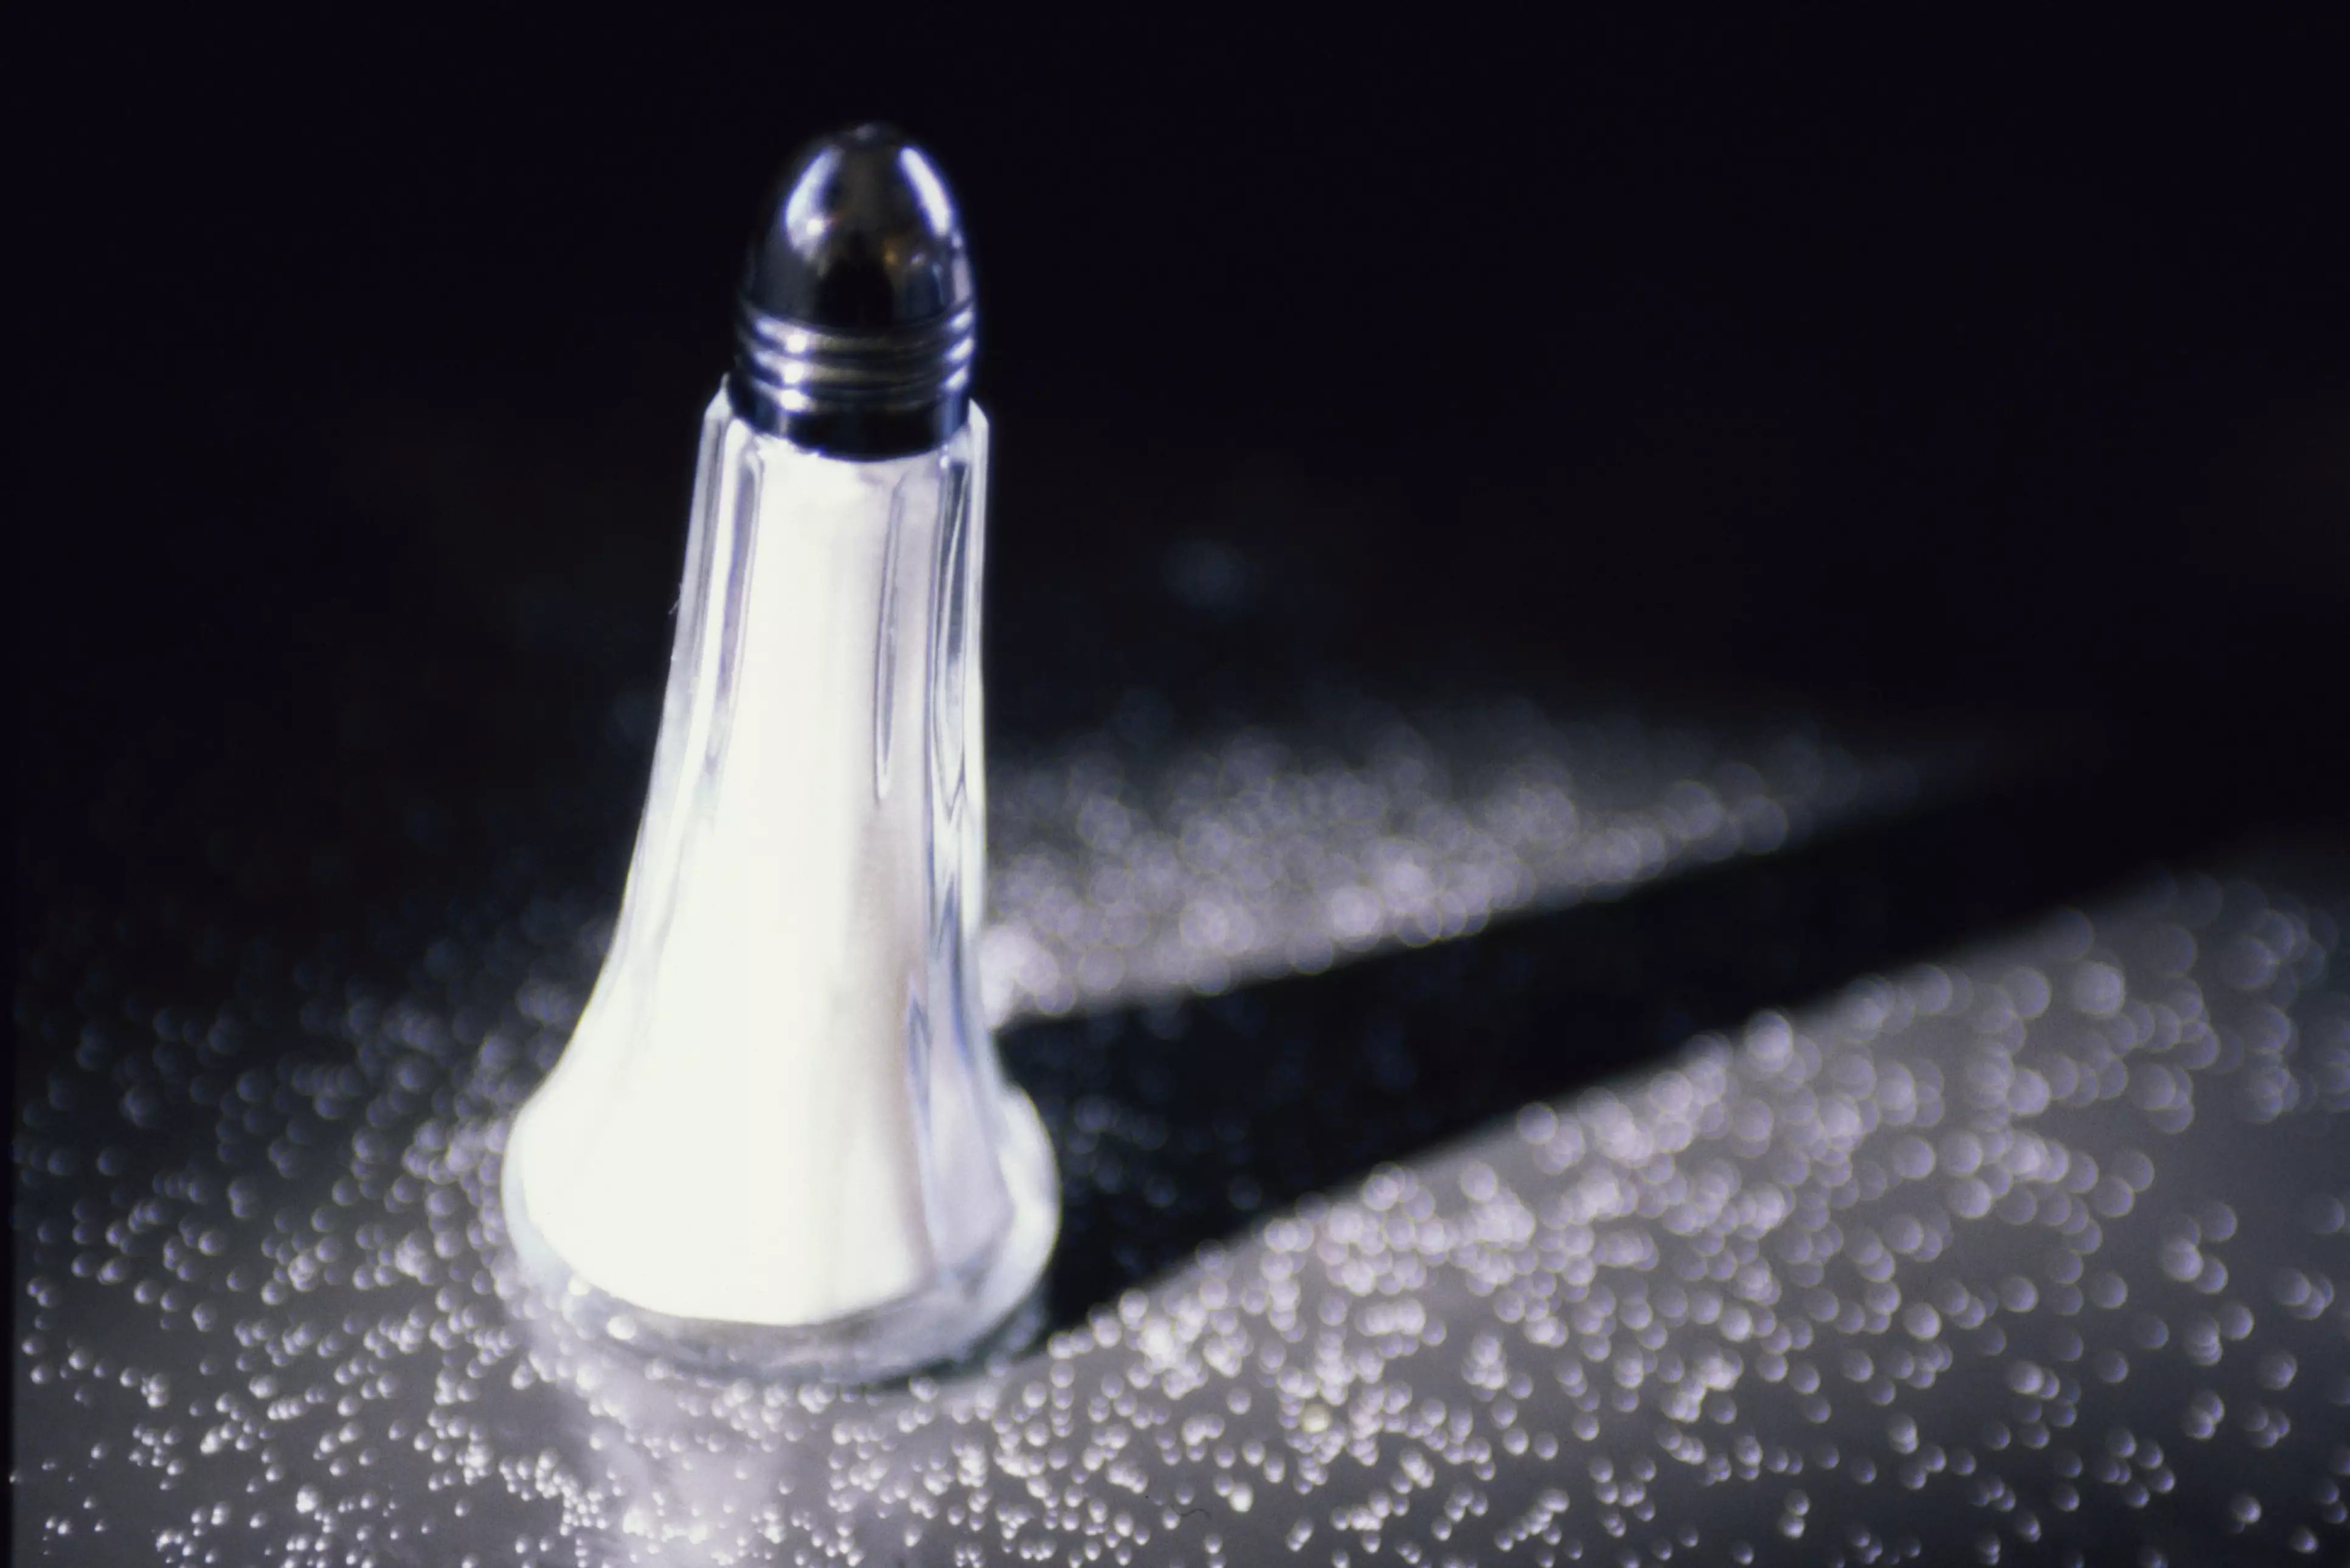 Close-up of a salt shaker